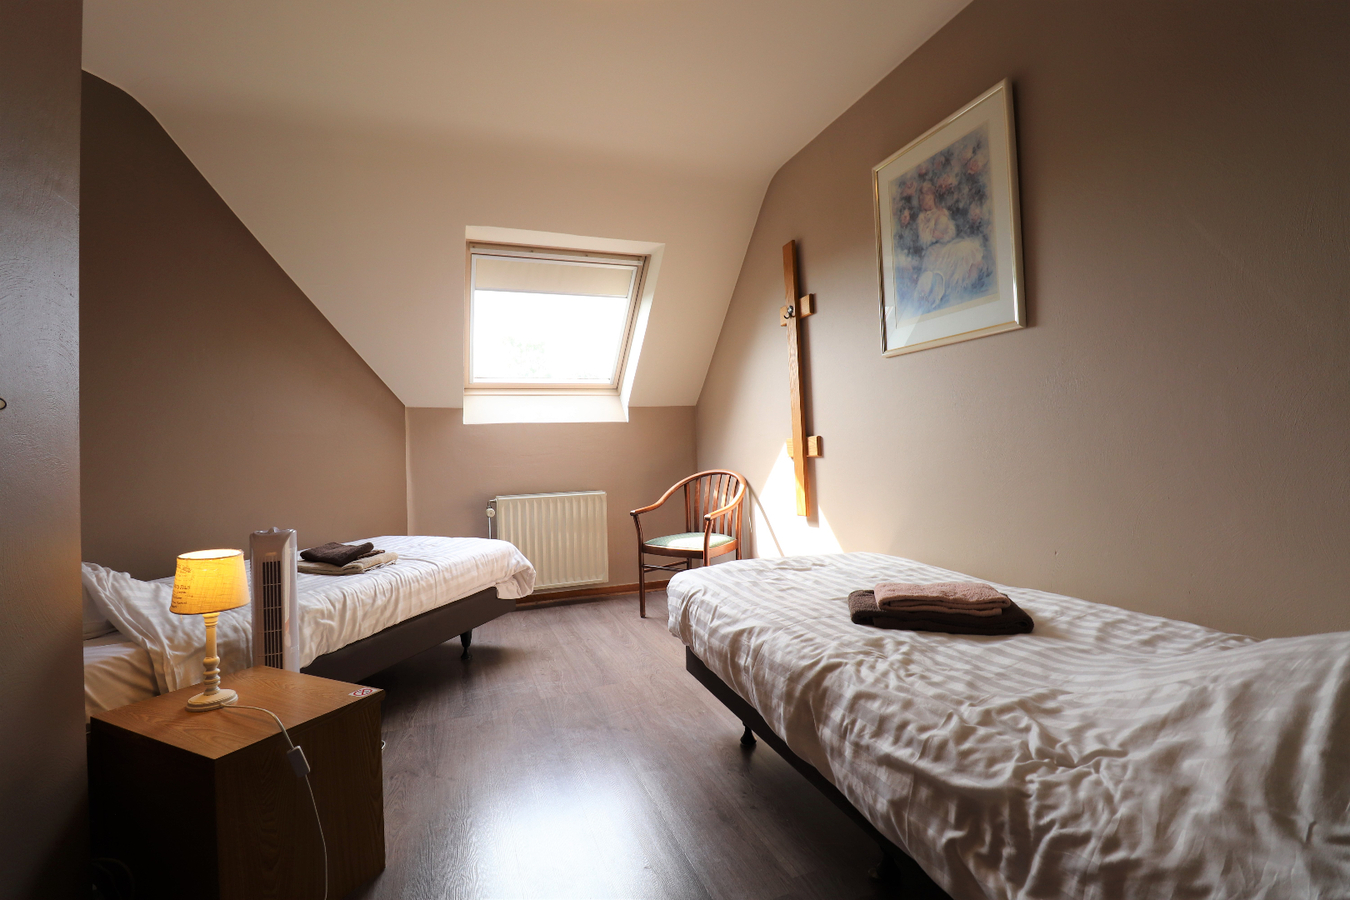 Prachtig hotel met 7 kamers, brasserie en priv&#233; appartement gelegen te Lommel 